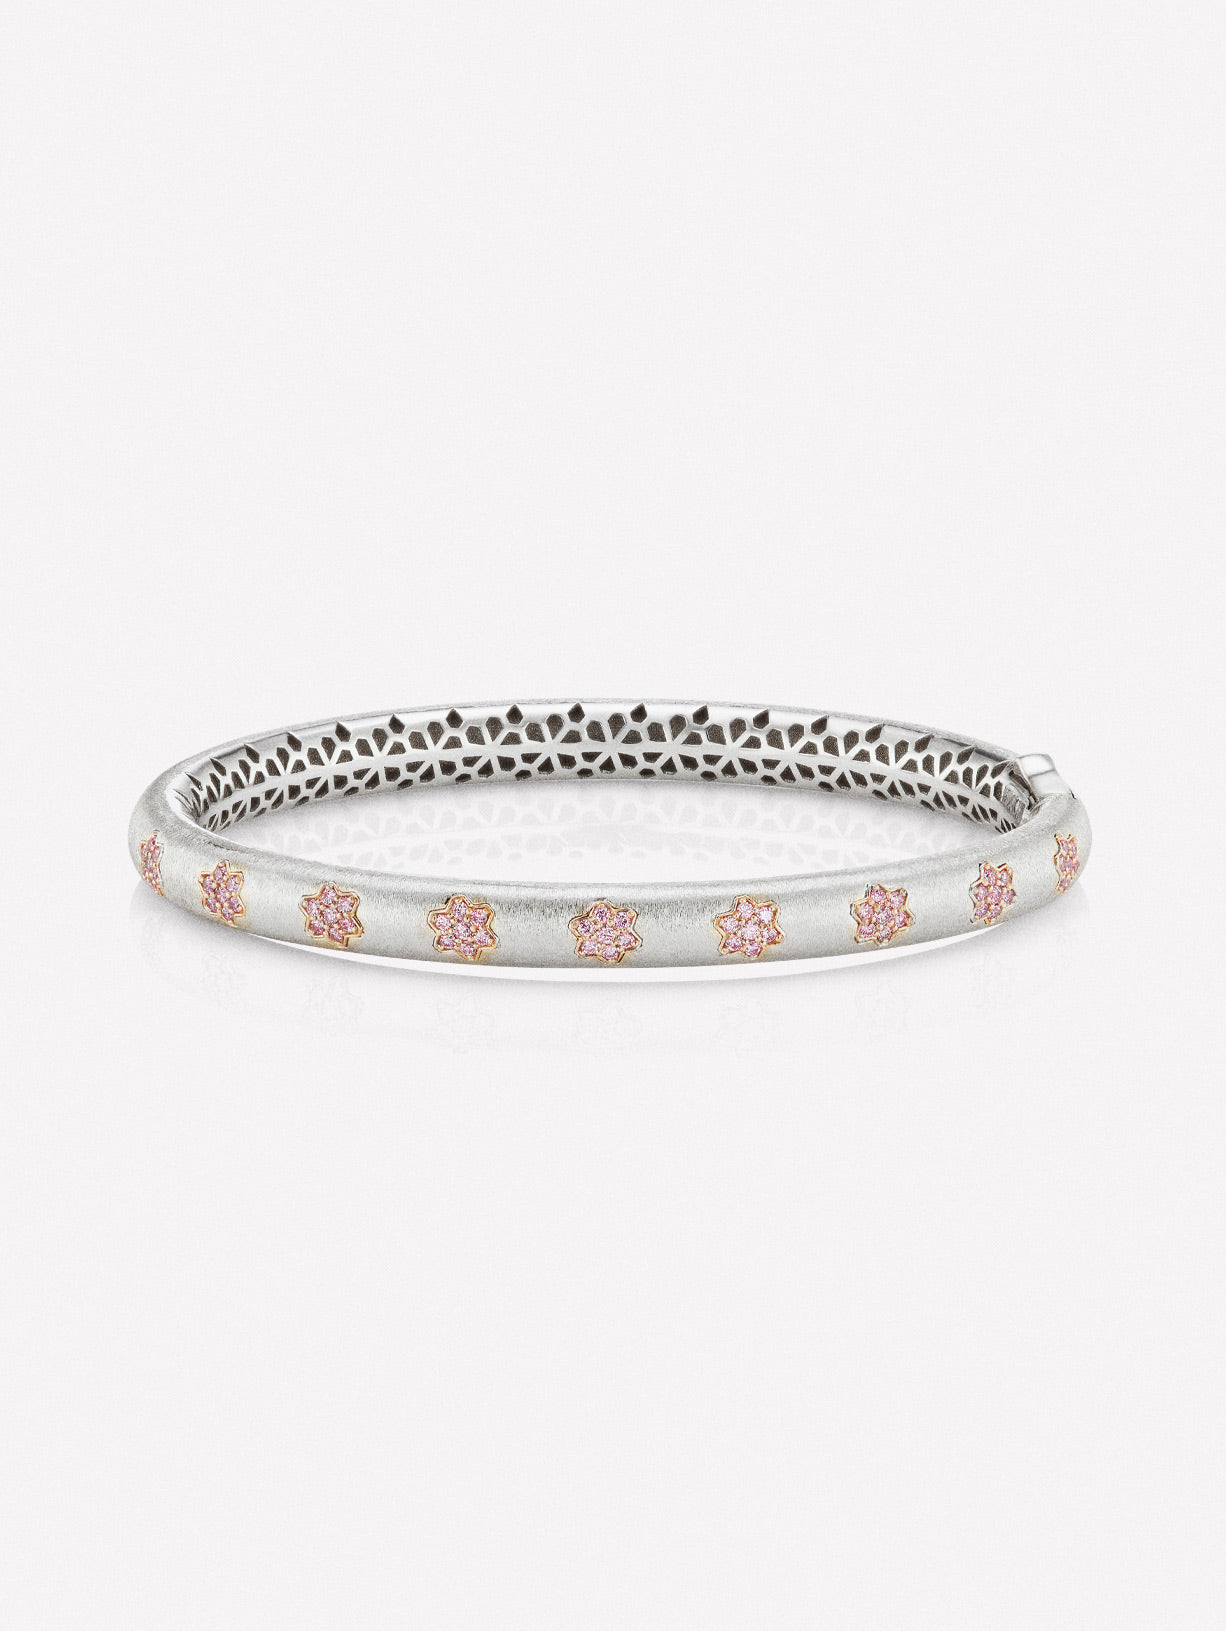 Argyle Pink™ Diamond 6P Floral Cuff Bracelet - Pink Diamonds, J FINE - J Fine, bracelet - Pink Diamond Jewelry, argyle-pink™-diamond-6p-floral-cuff-bracelet-by-j-fine - Argyle Pink Diamon